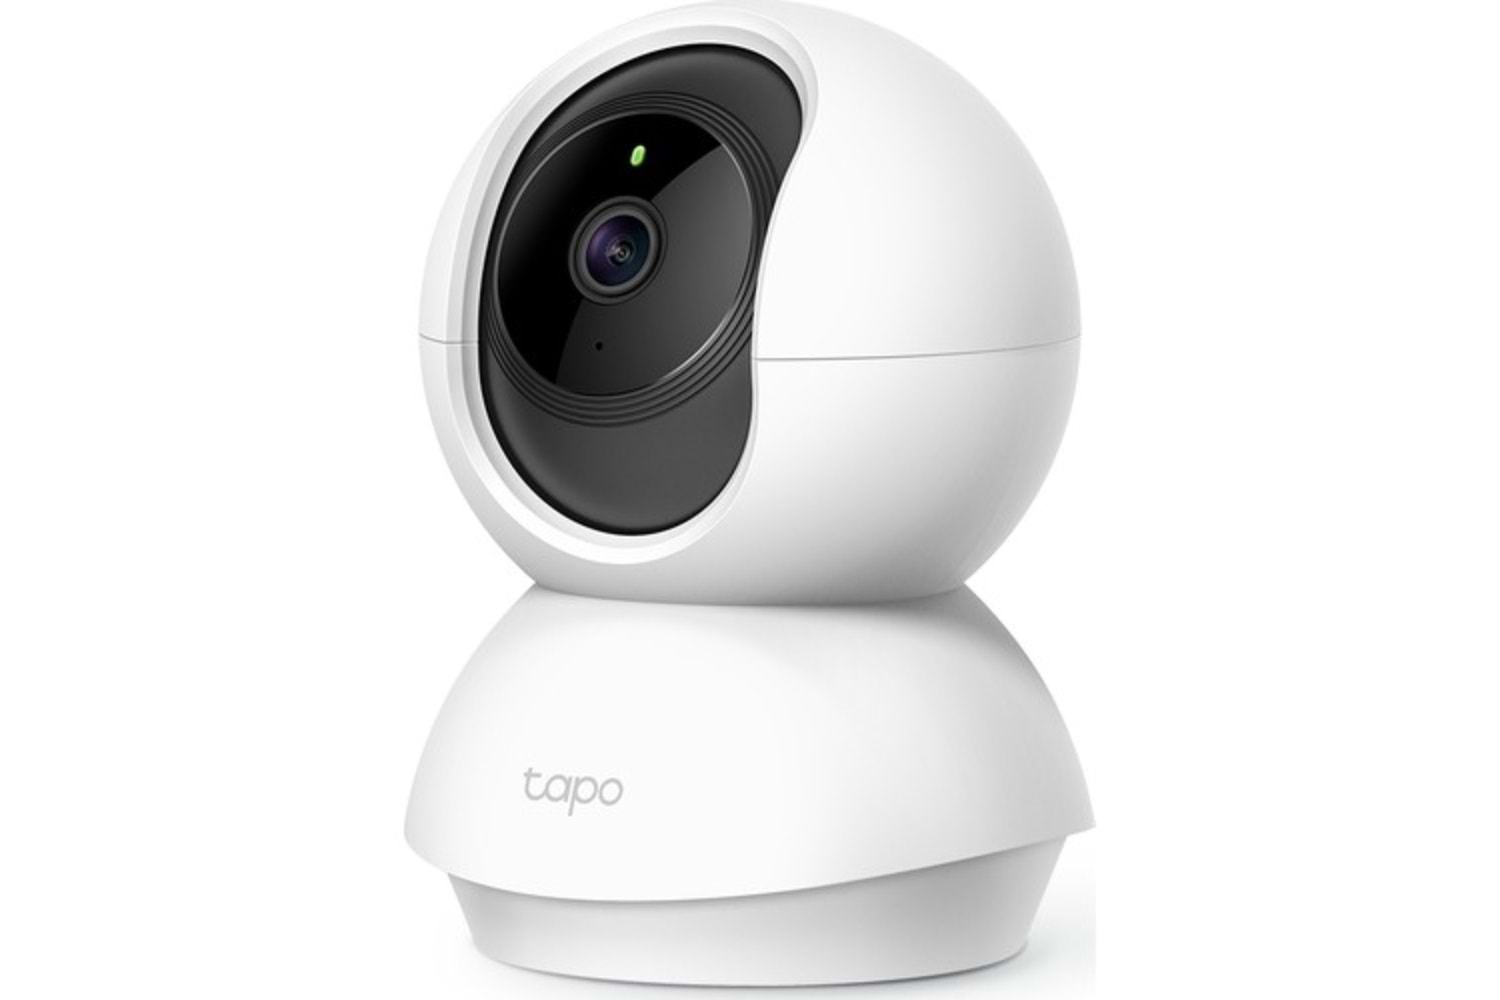 TP-Link Tapo C200 Wi-Fi Full HD 1080P Pan/Tilt Ev Güvenlik Kamerası